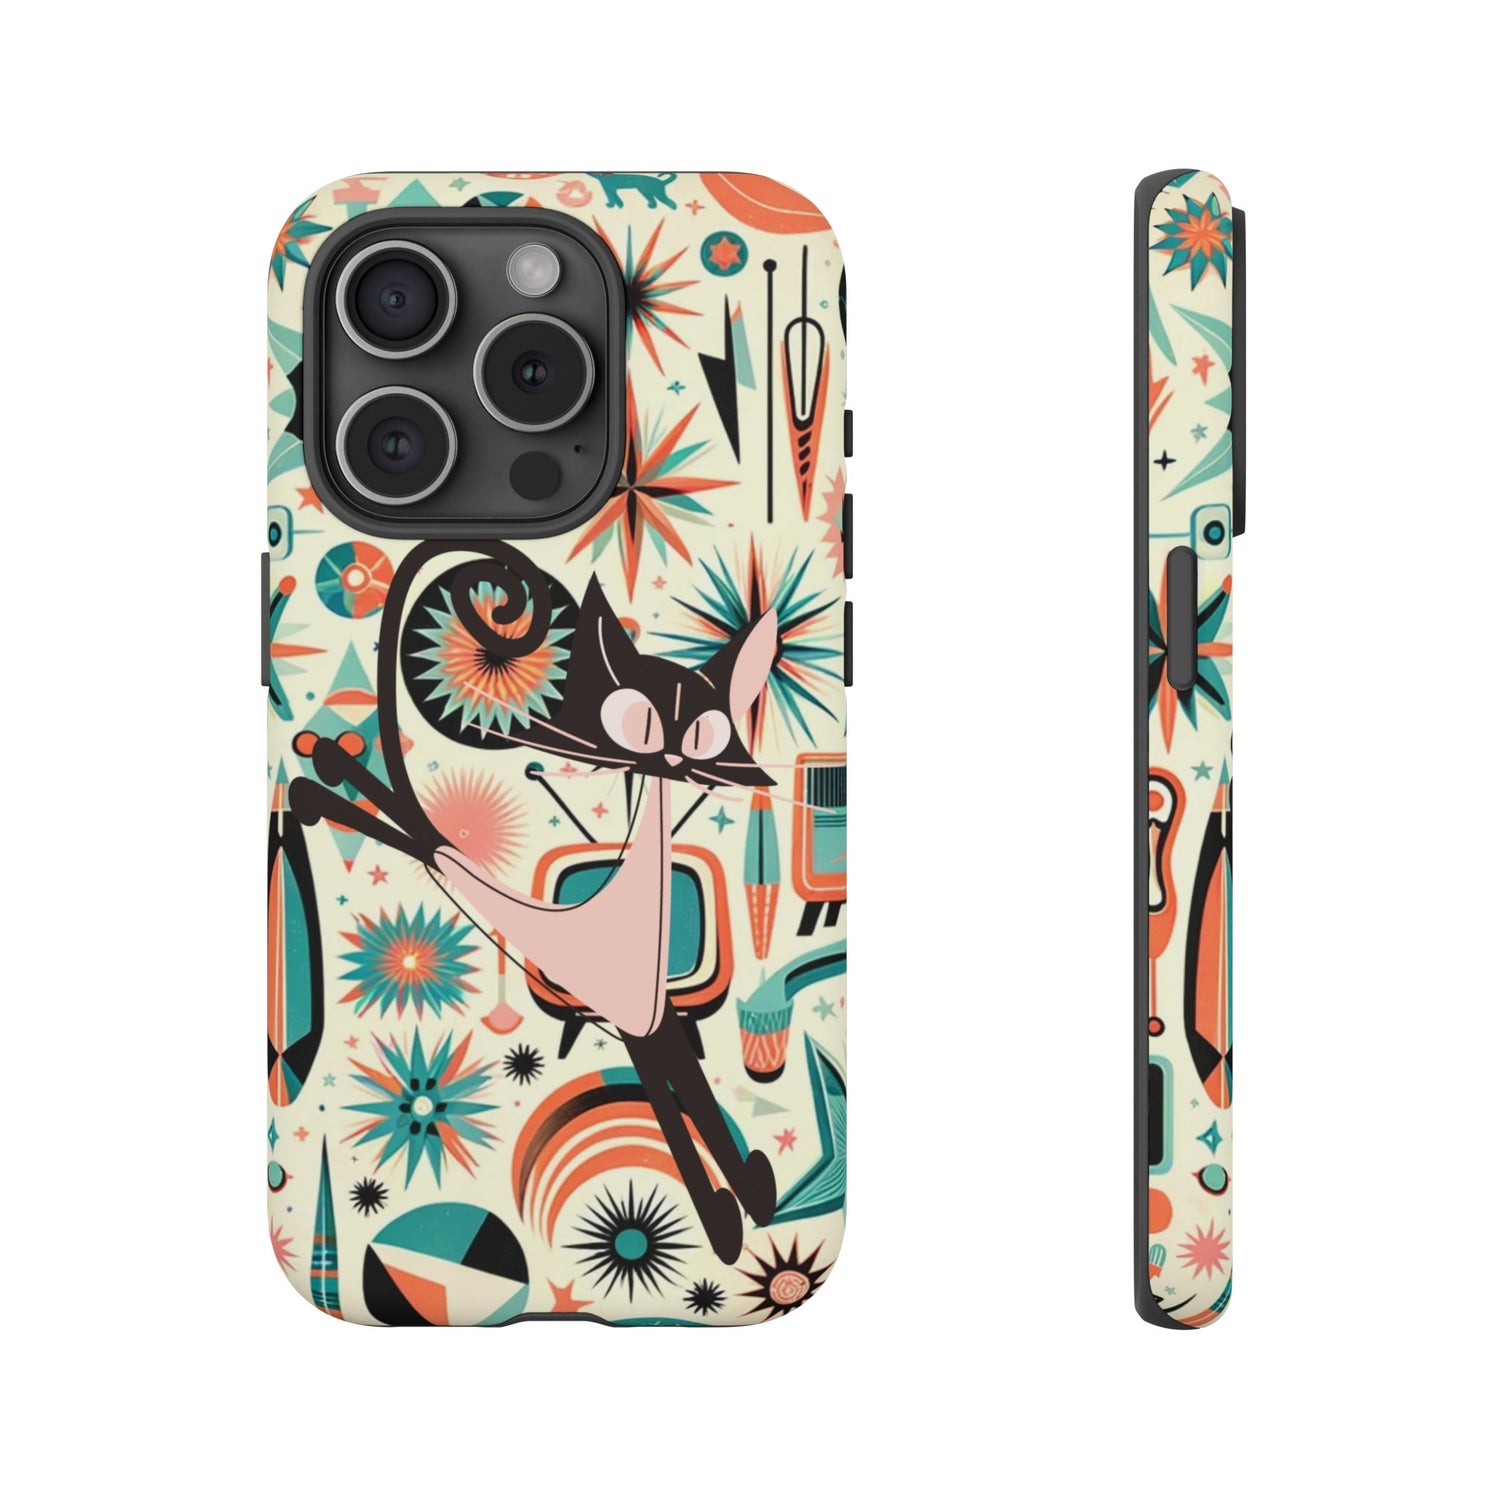 Atomic Kitty Boomerang Space Kitty Mid Century Modern Samsung, Smart Phone, Tough Cases